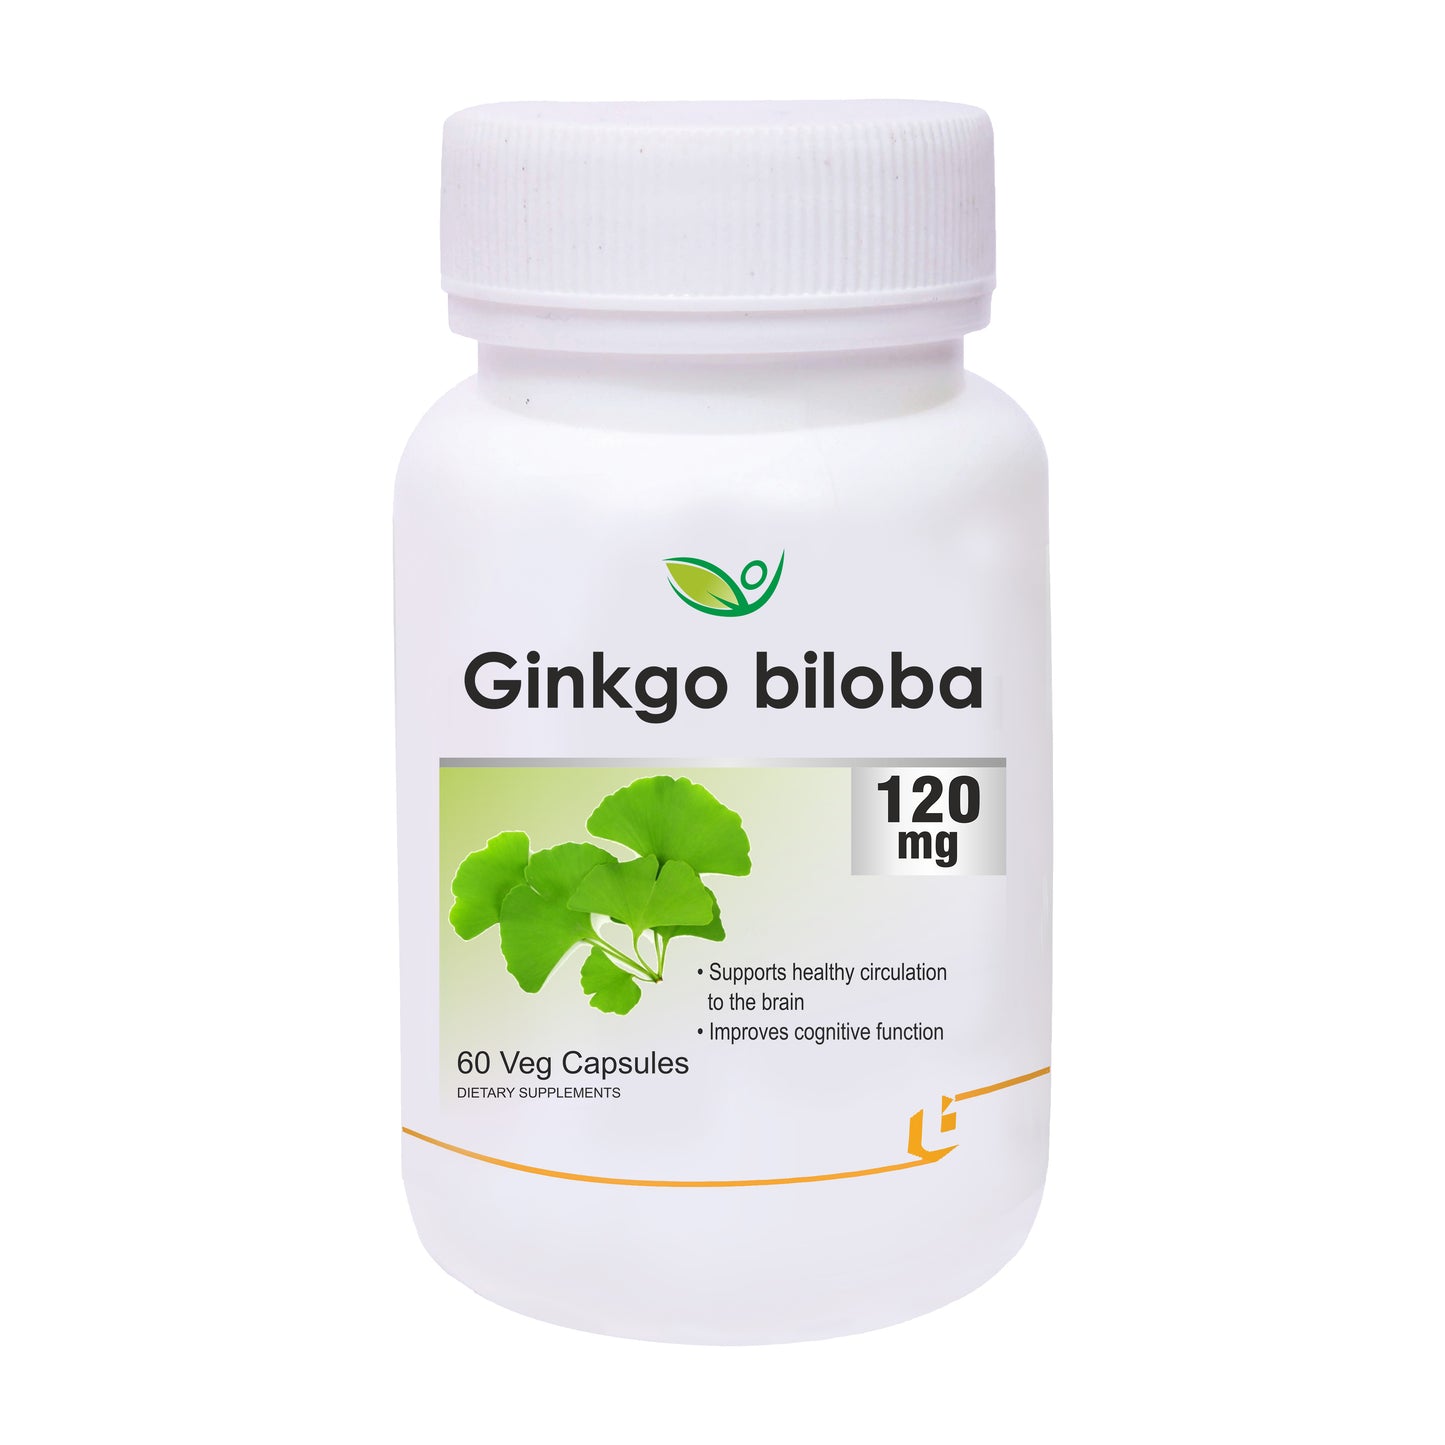 Biotrex Ginkgo biloba 120mg - 60 Capsules